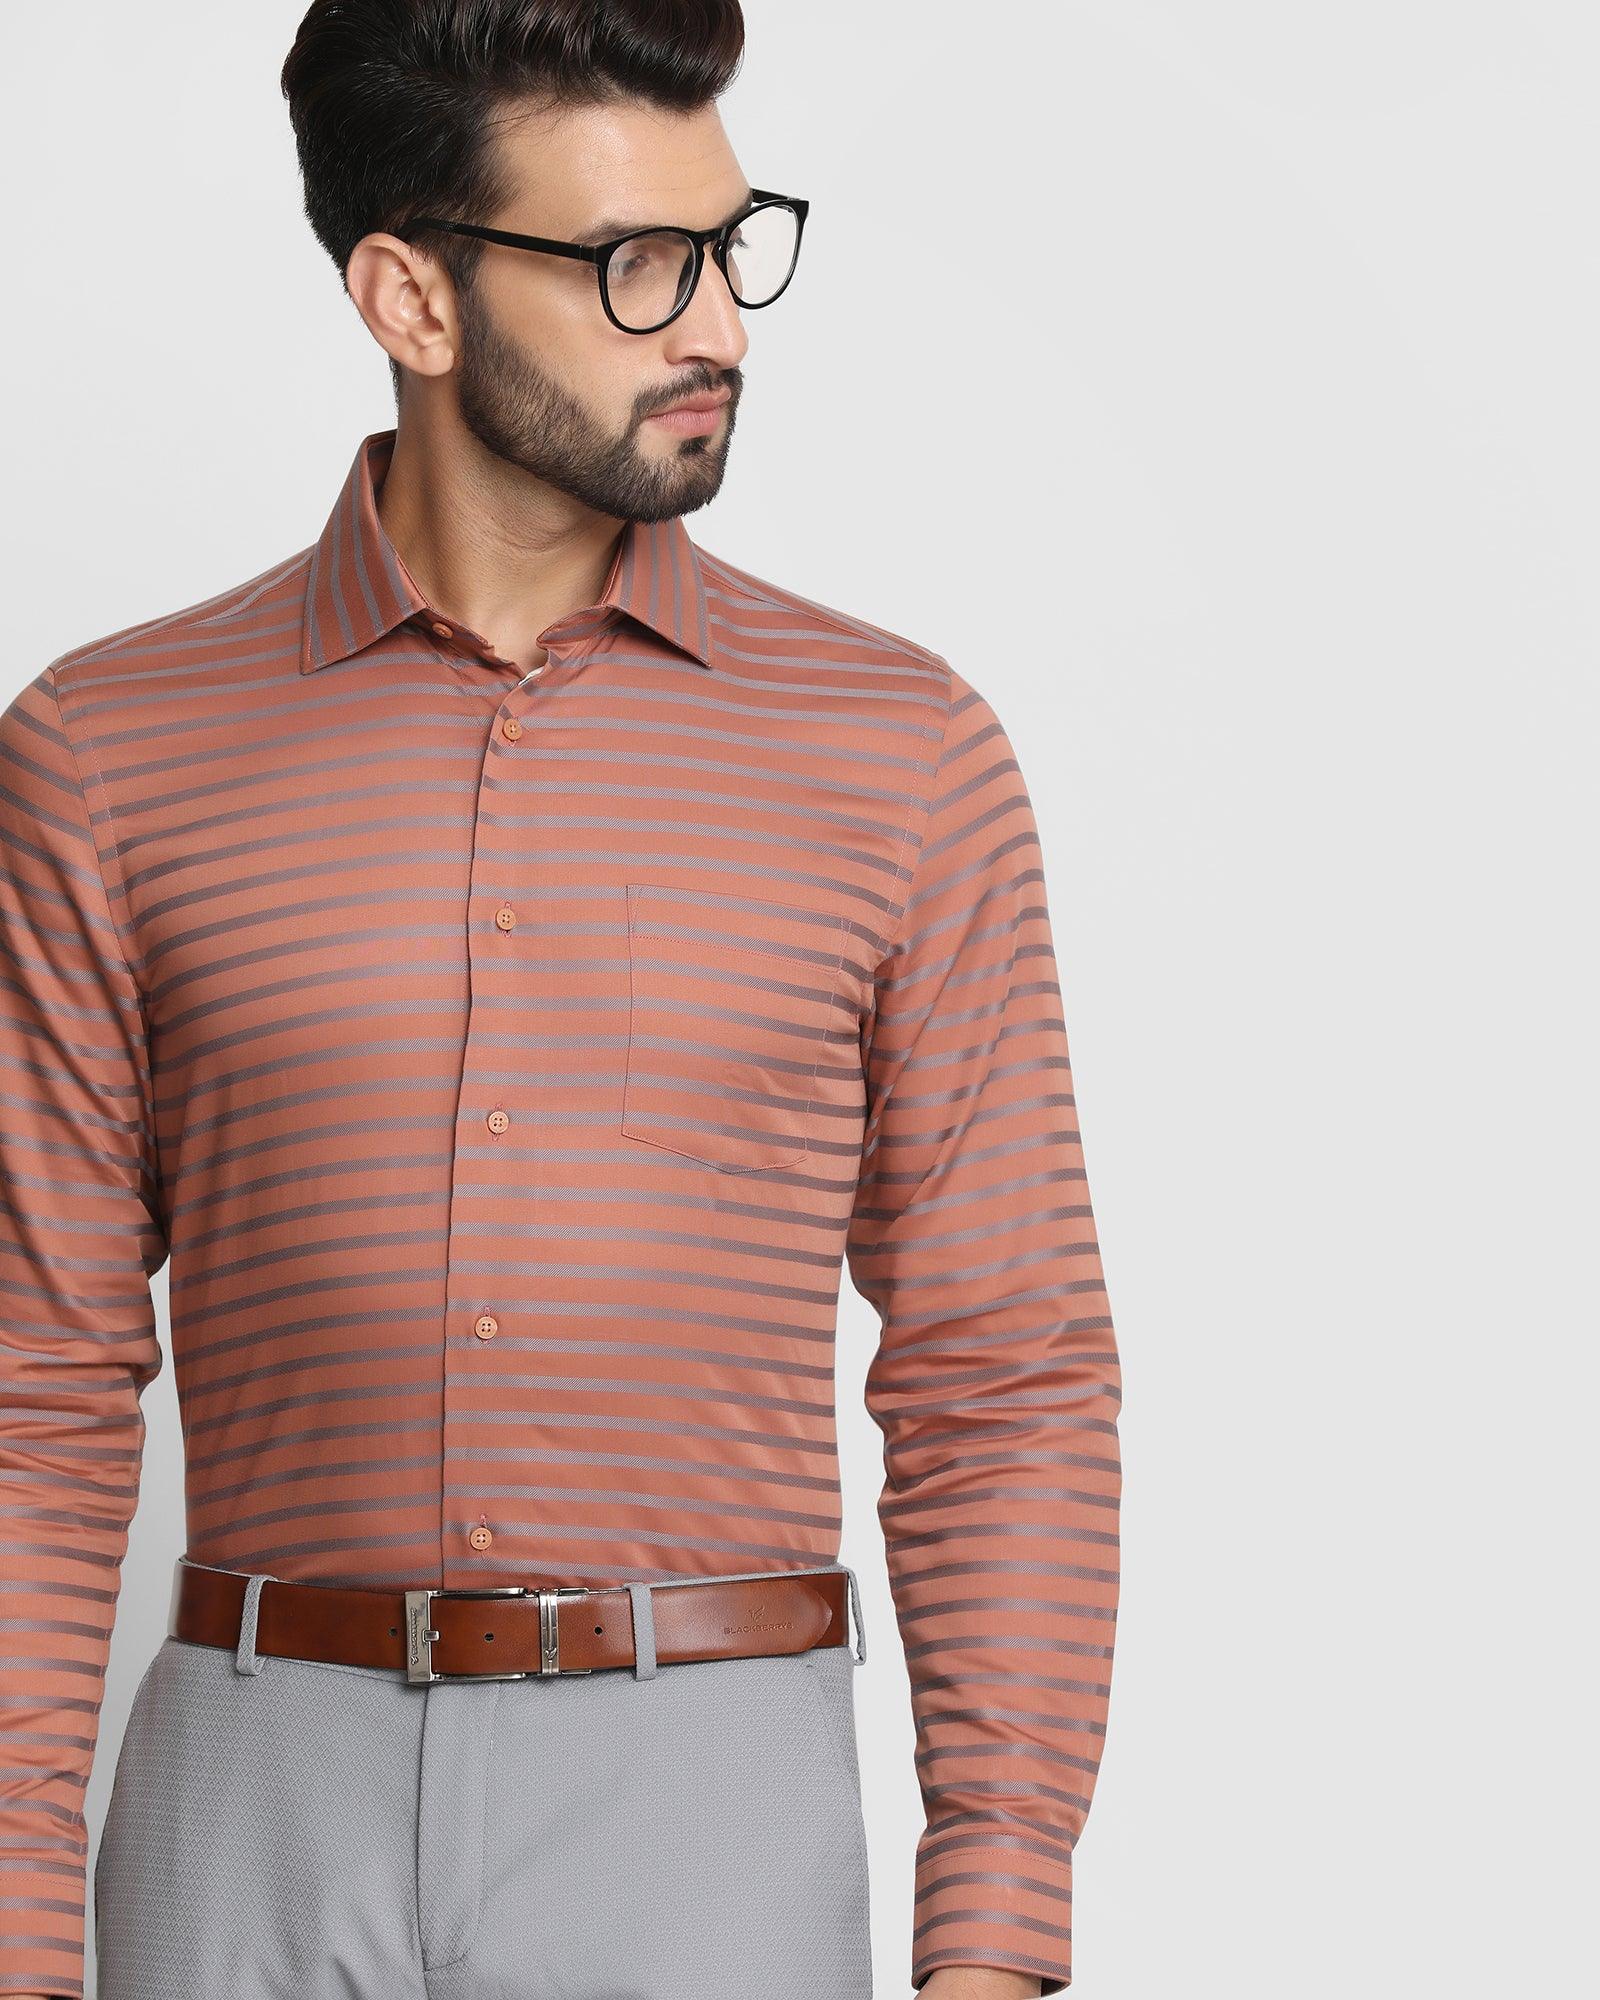 Formal Rust Striped Shirt - Mentos